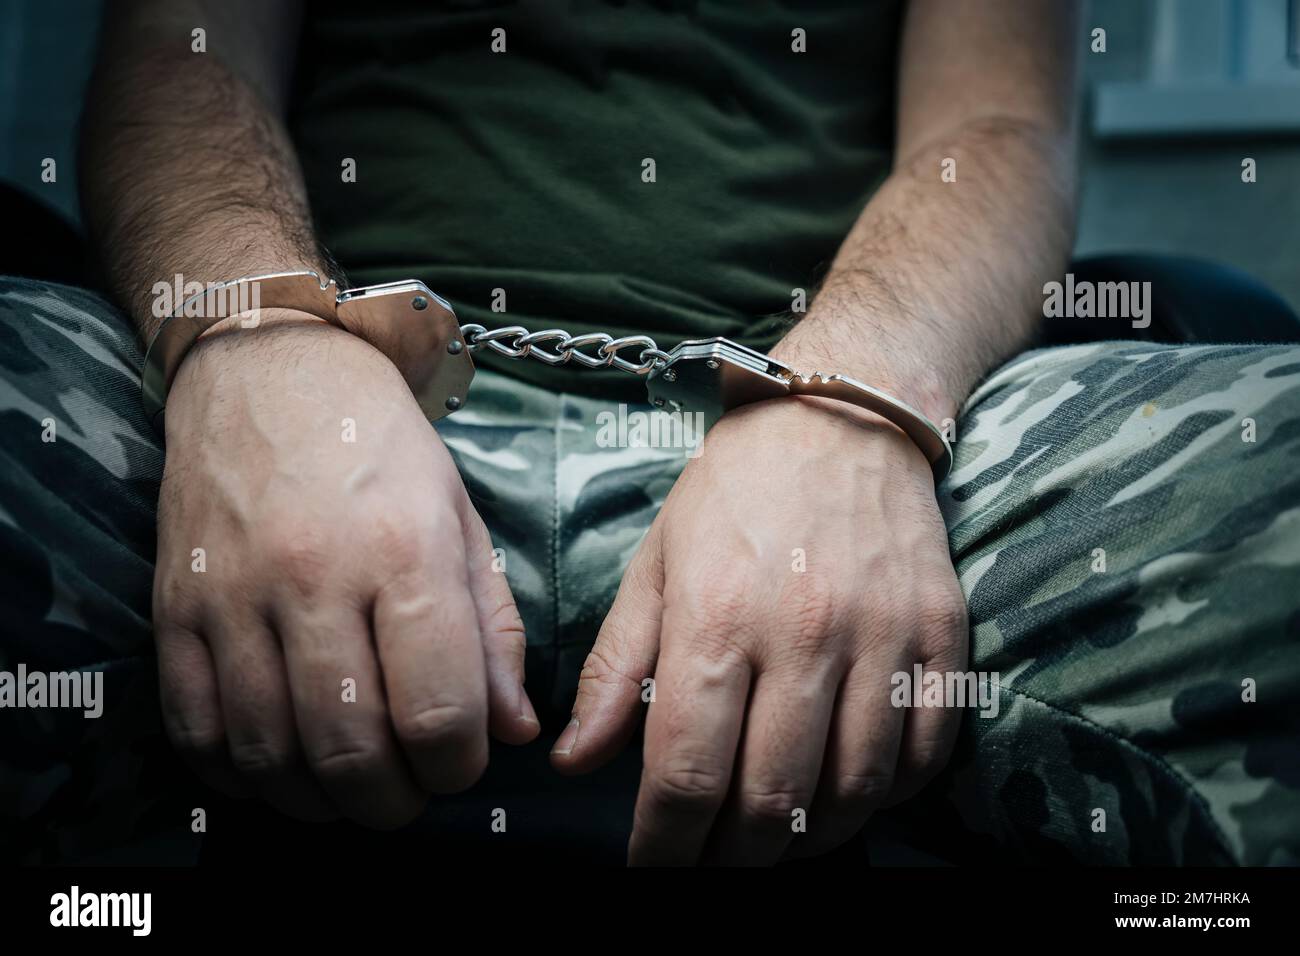 military soldier in handcuffs, hands behind his back, on a dark background. Concept: war criminal, prisoner of war, tribunal. a prisoner of war under Stock Photo